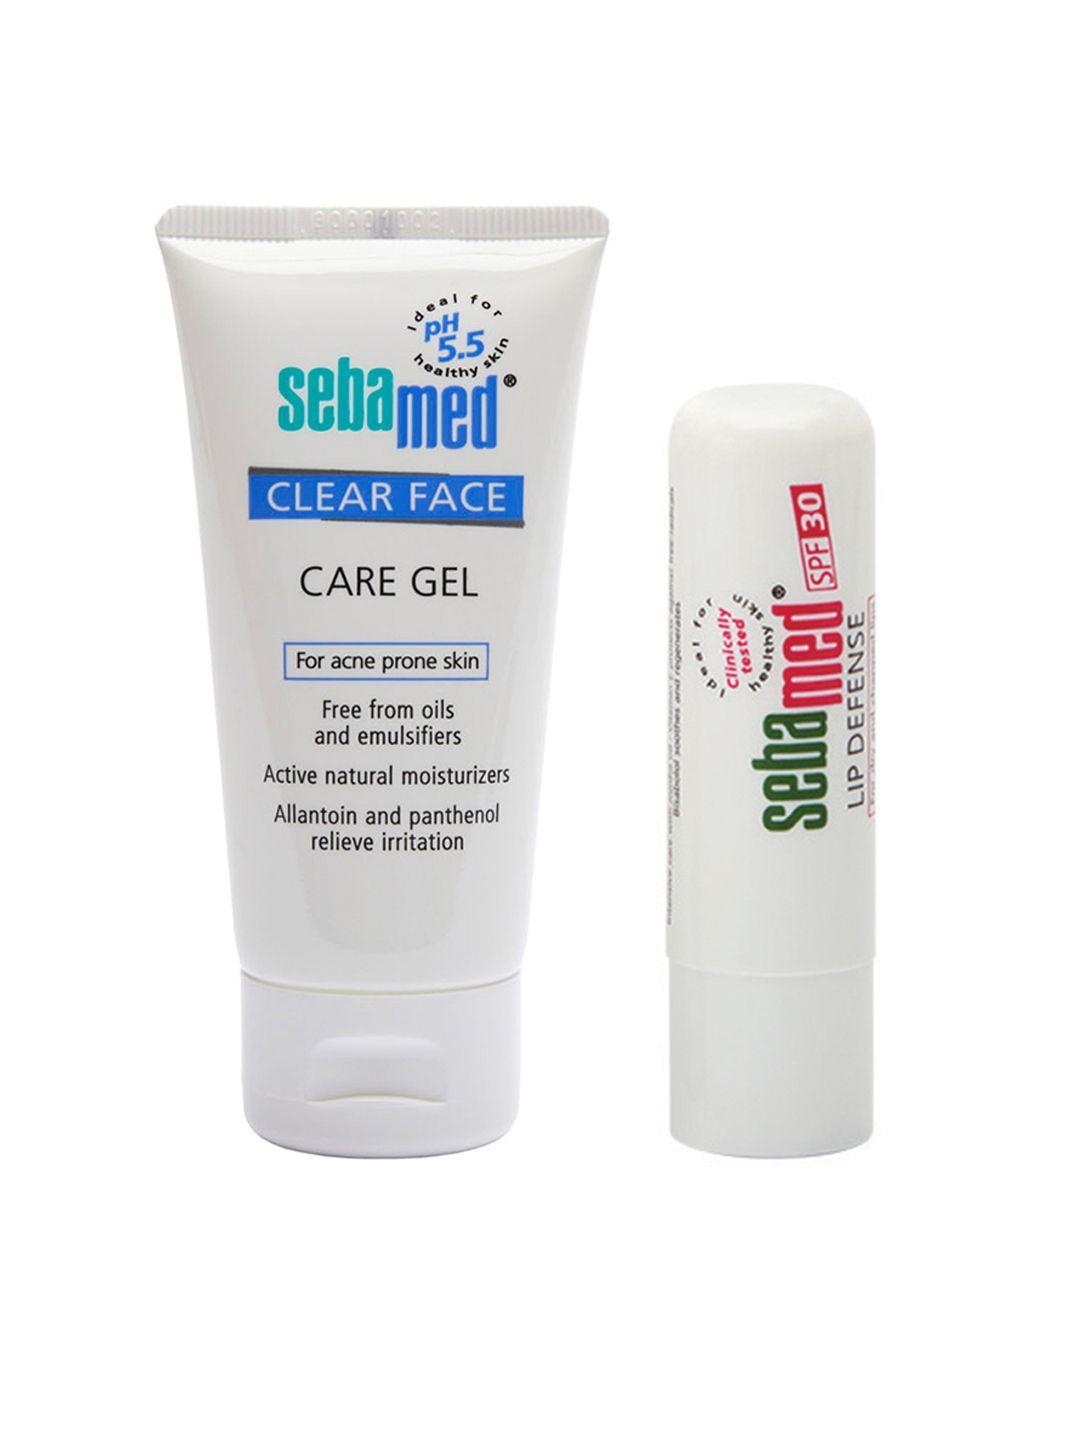 sebamed-set-of-clear-face-care-gel-&-lip-defense